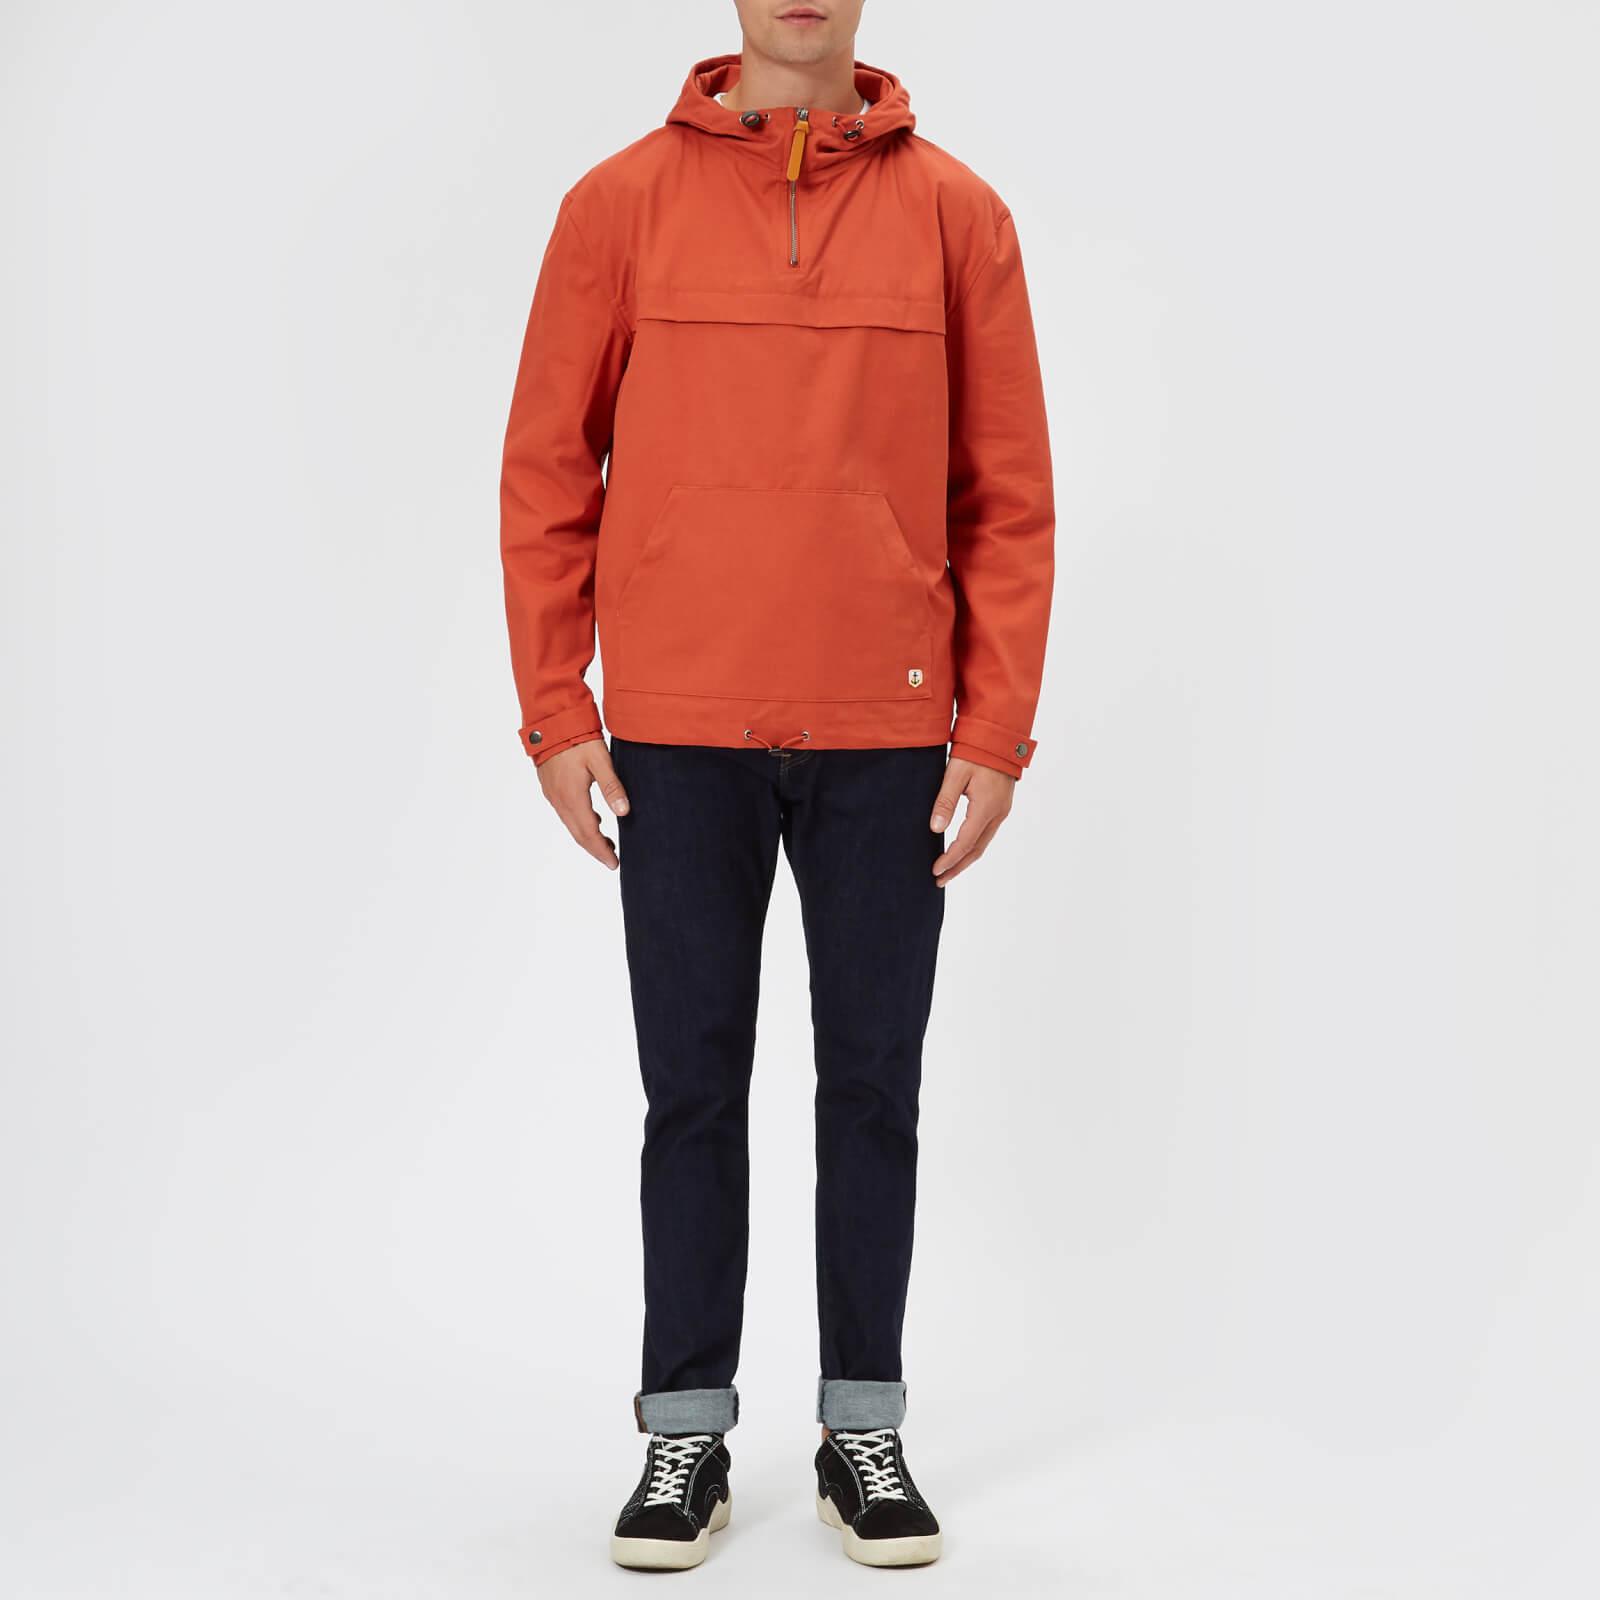 Armor Lux Cotton Water Repellent Fisherman's Smock Jacket in Orange for Men  - Lyst